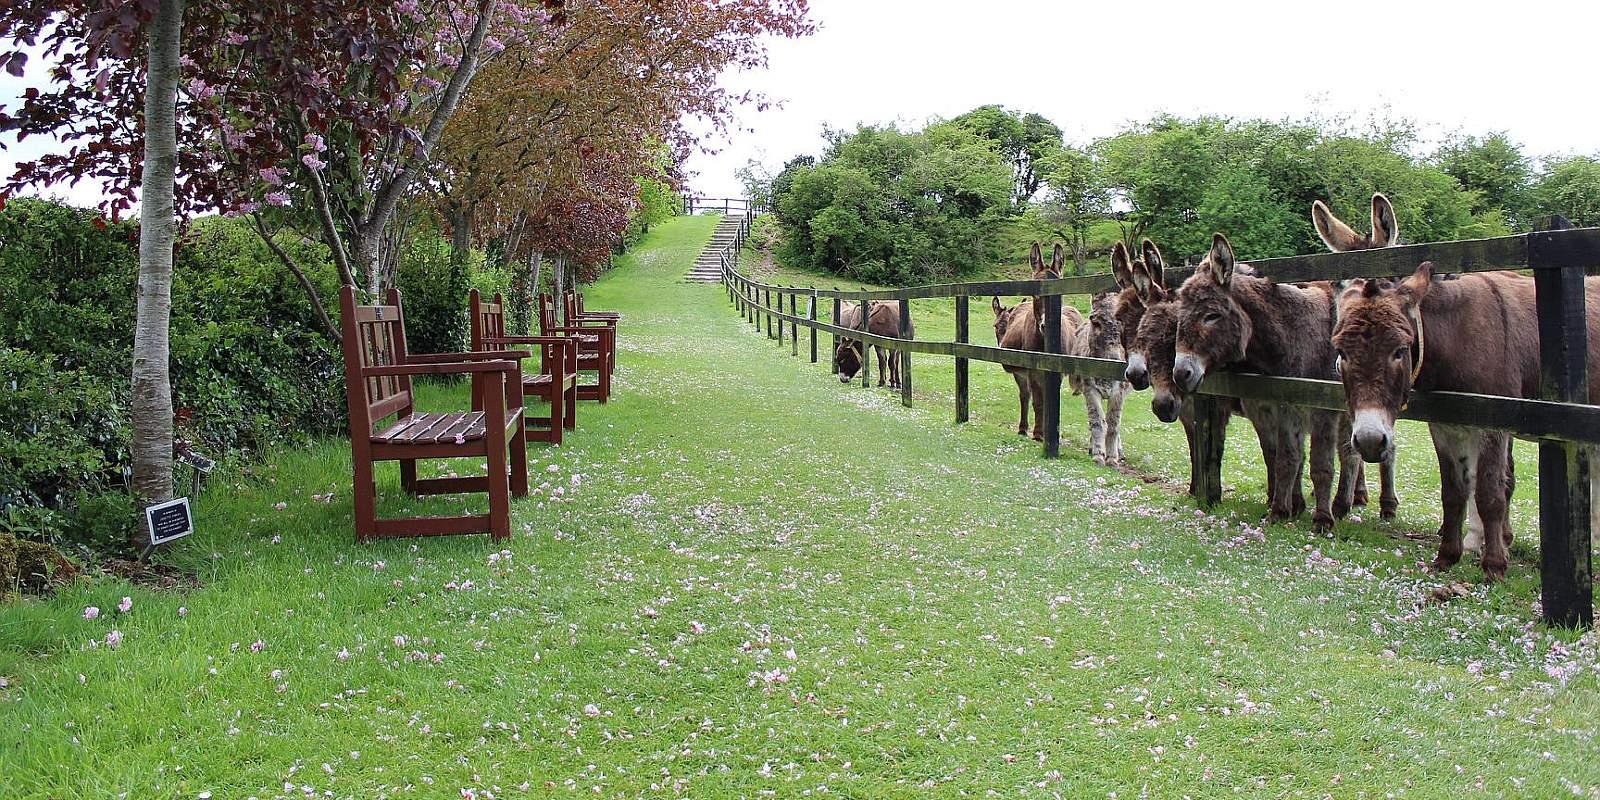 Donkeys at fence along walkway